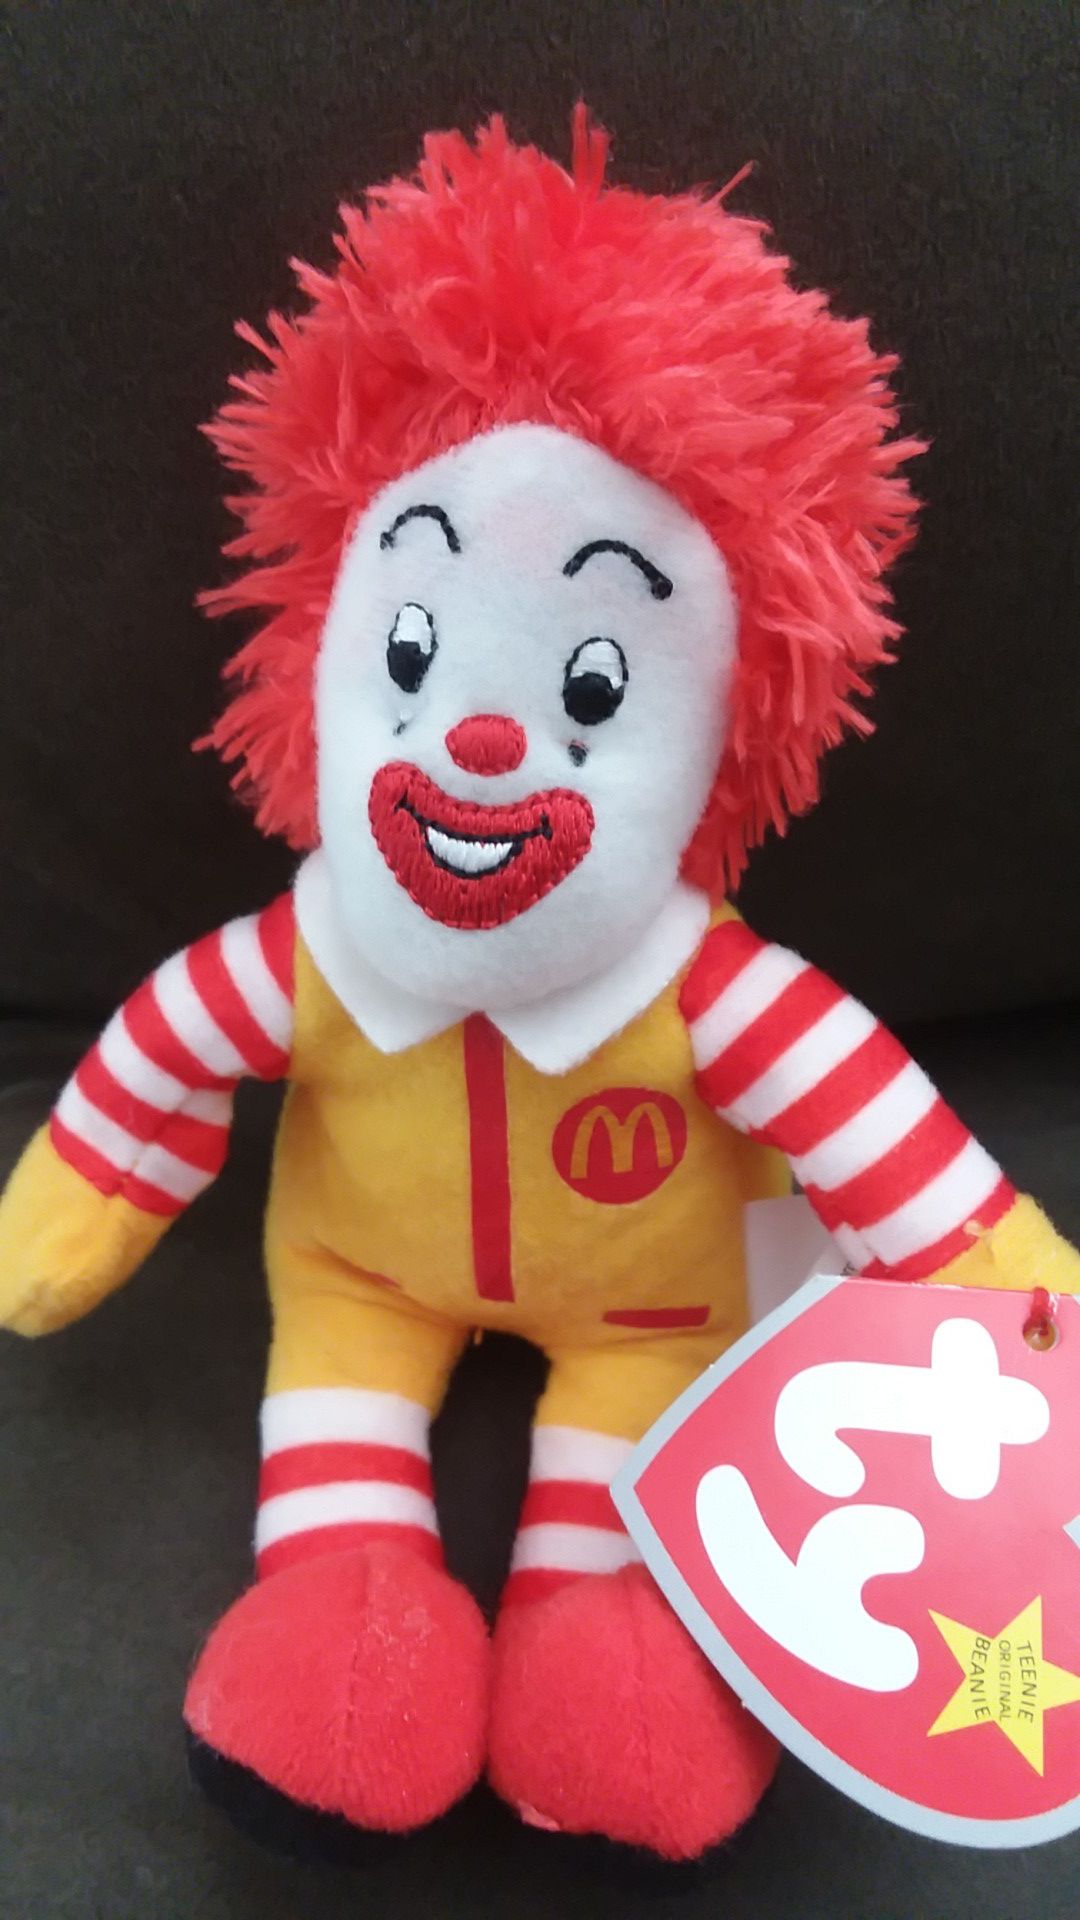 Ronald McDonald TY beanie baby